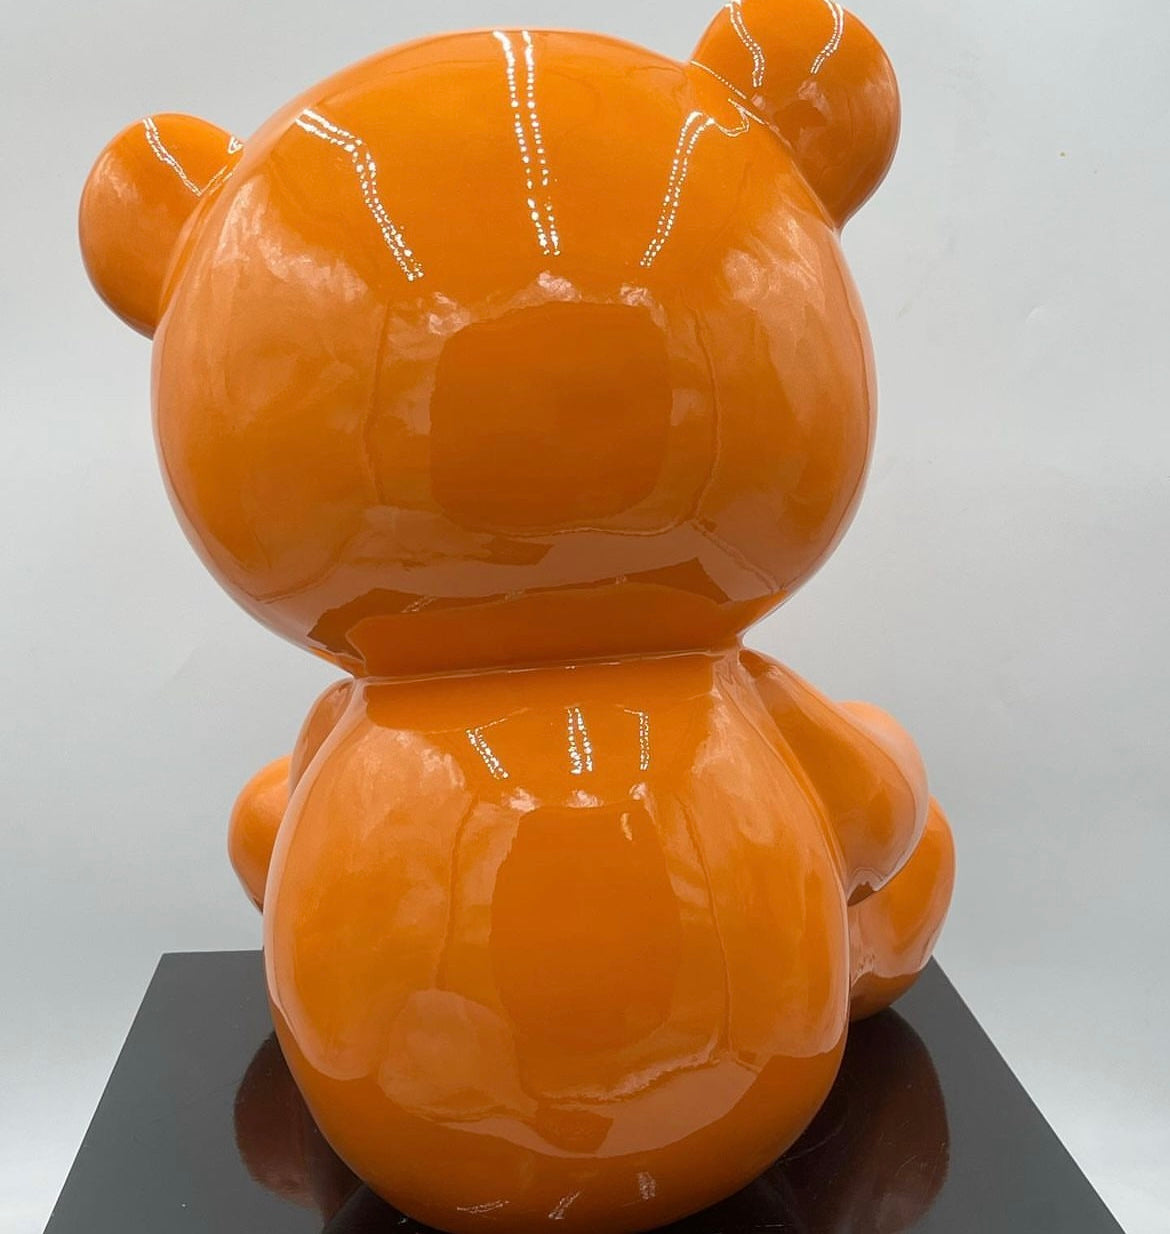 NAOR - 40cm H Tribute, Orange Teddy Bear